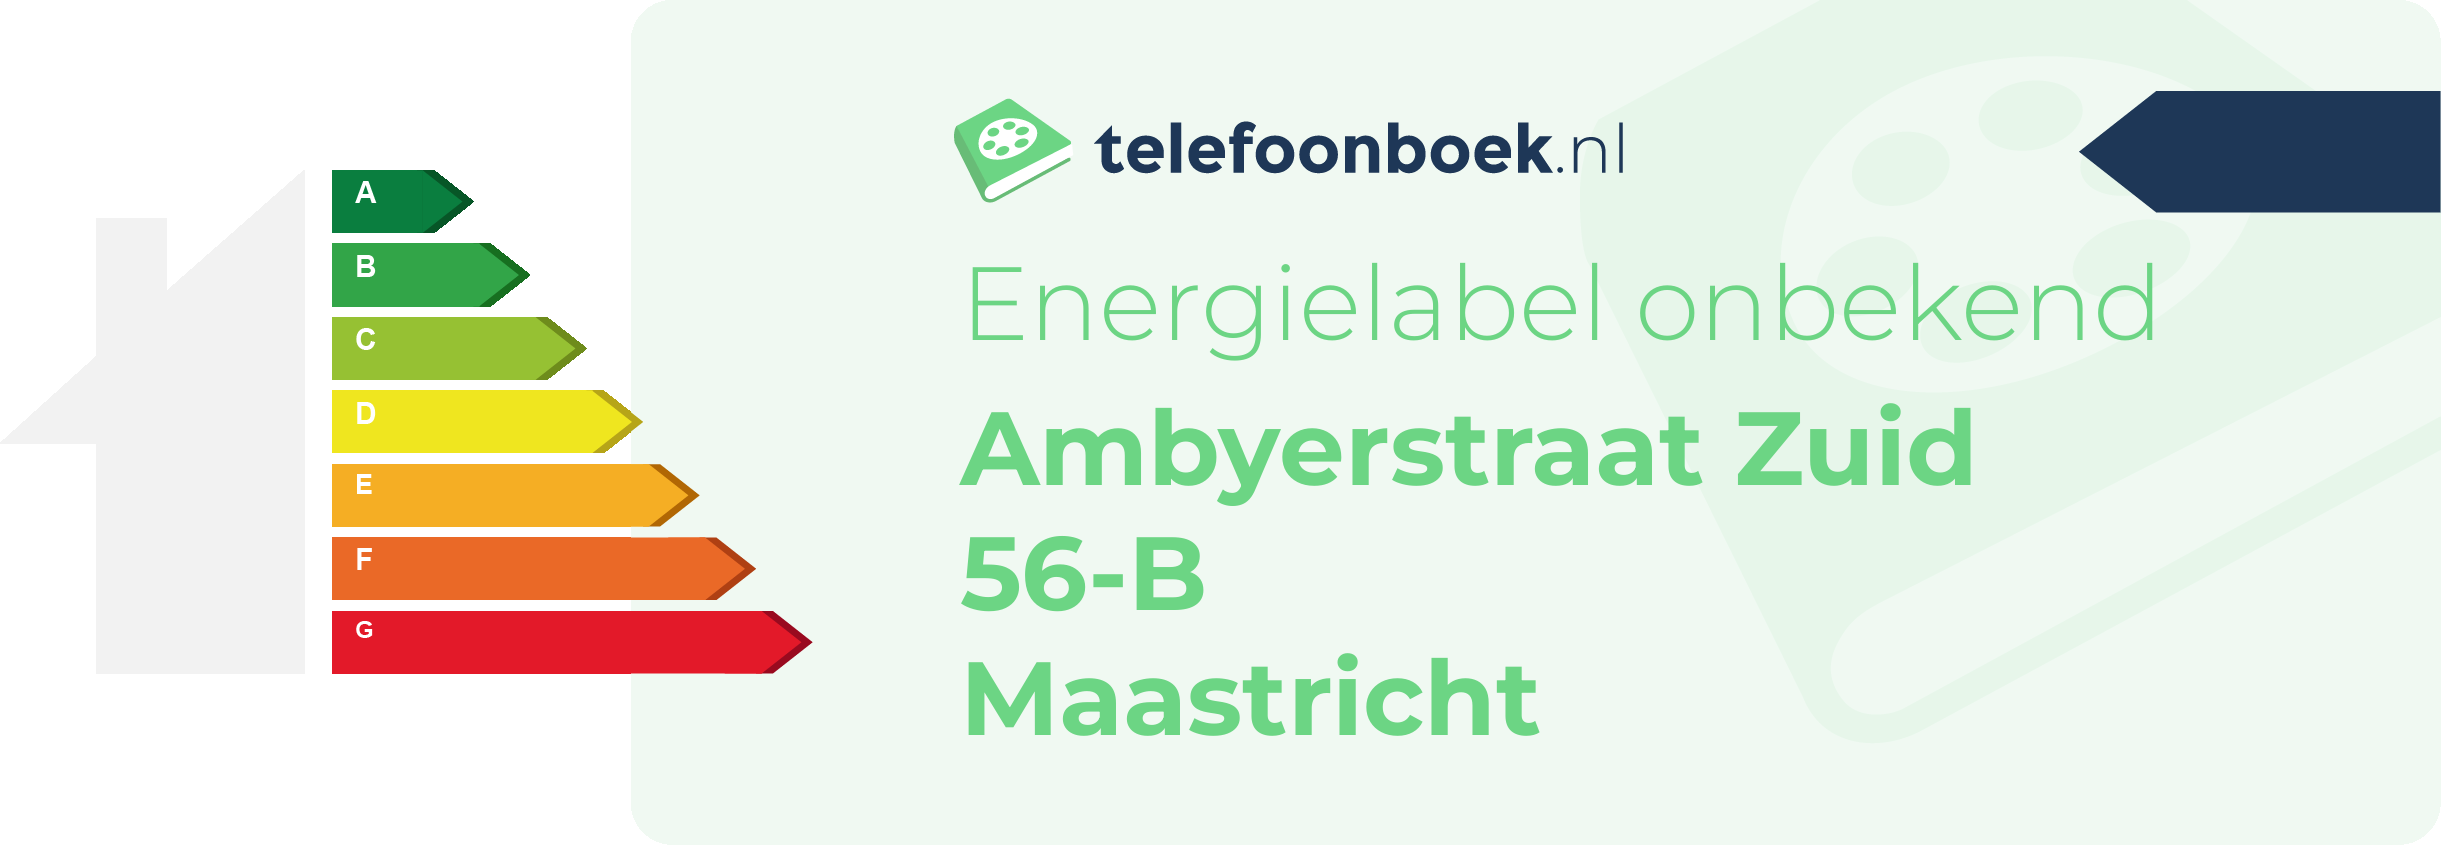 Energielabel Ambyerstraat Zuid 56-B Maastricht